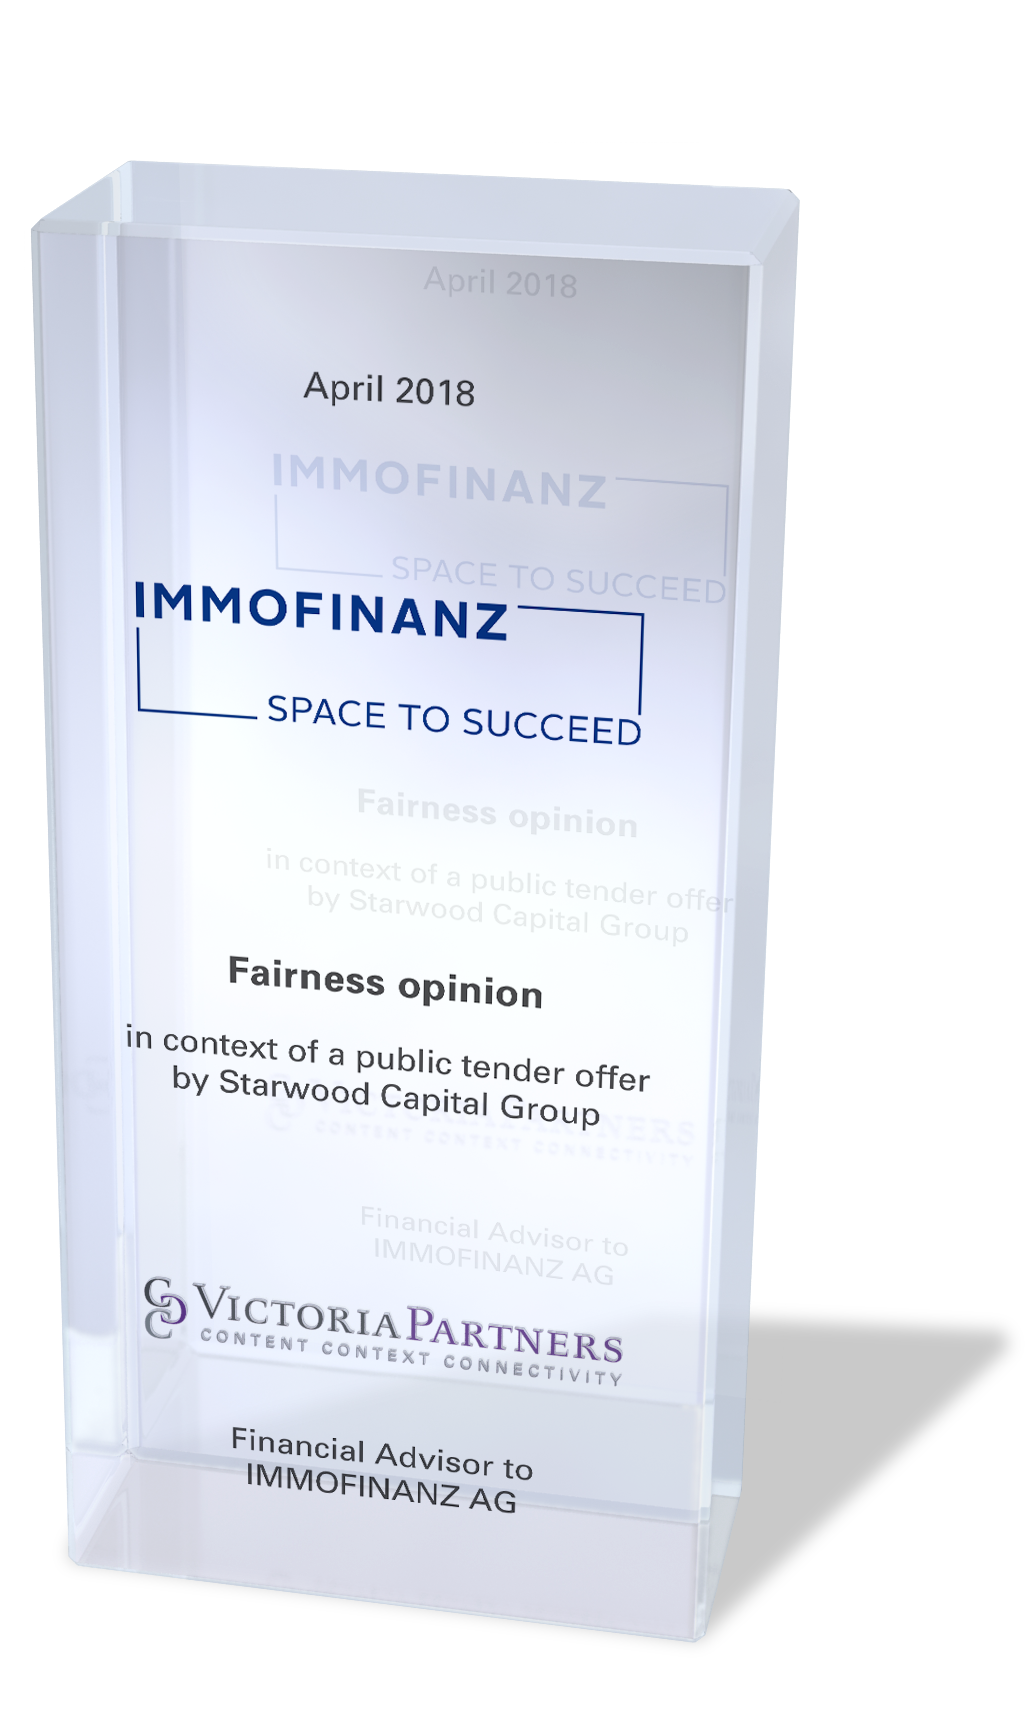 VICTORIAPARTNERS - Financial Advisor to Immofinanz AG - April 2018